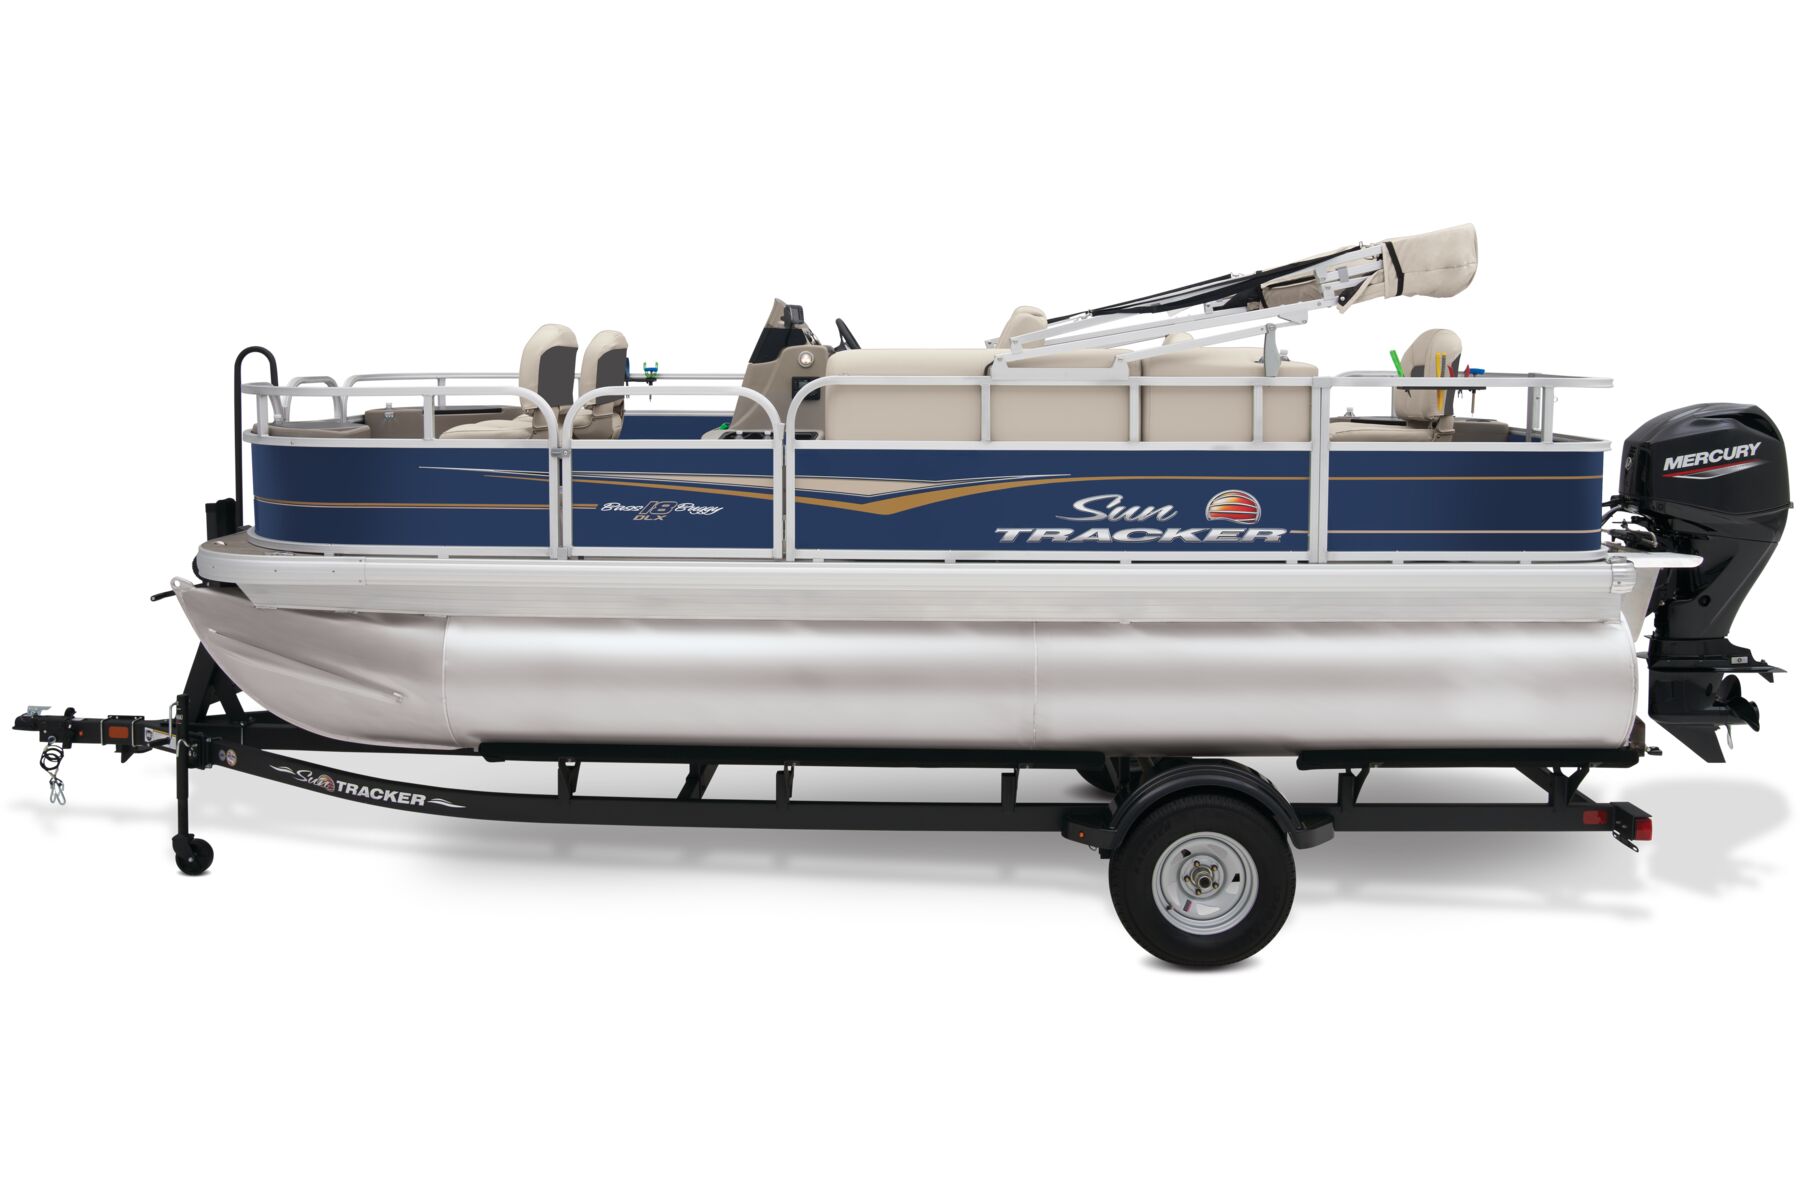 Outboard pontoon boat - BASS BUGGY® 16 DLX - Sun Tracker - sport